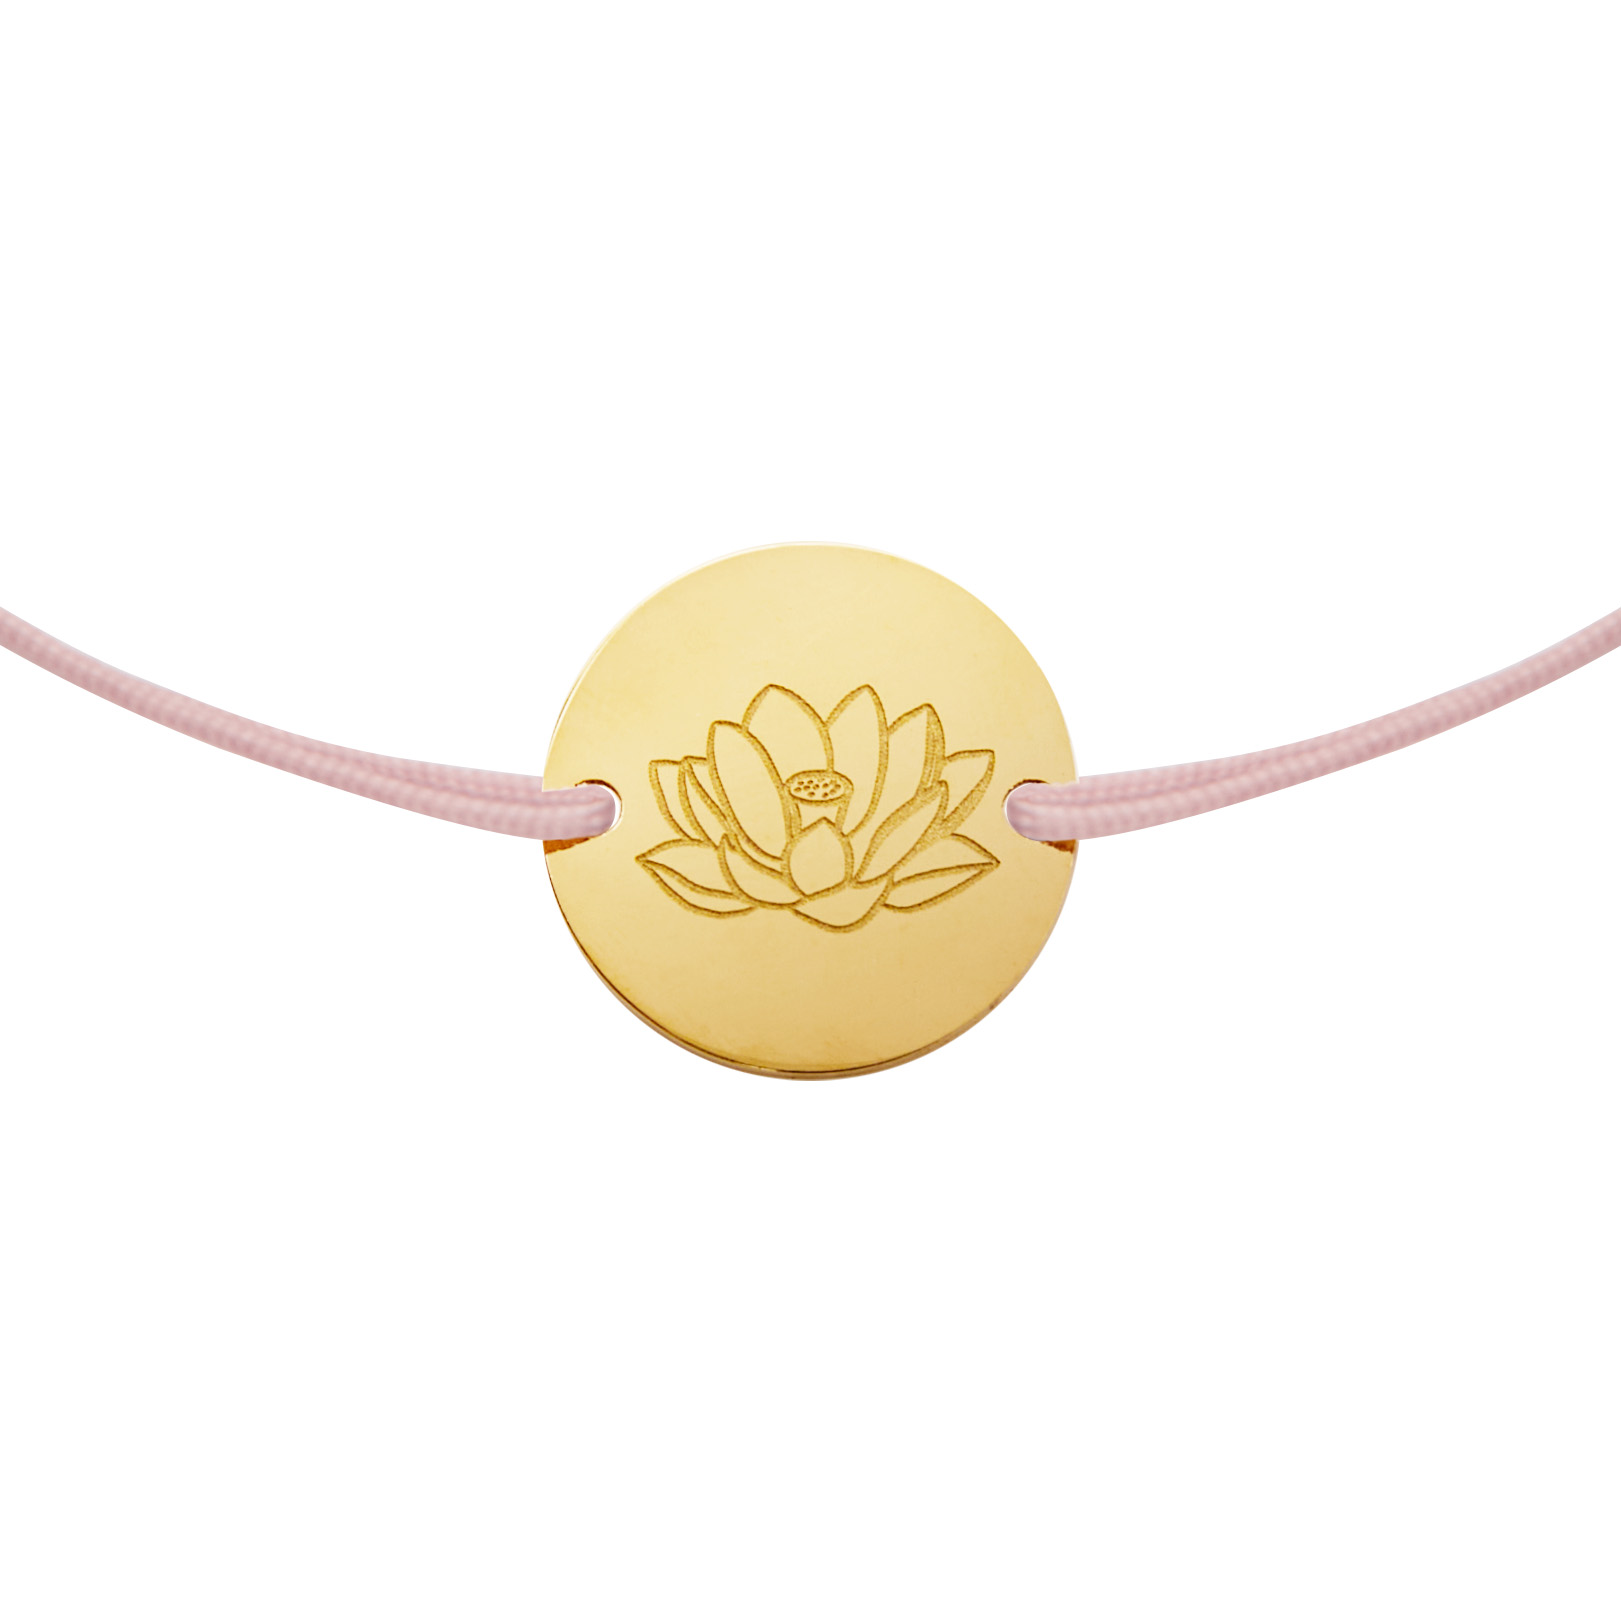 Bracelet-"Flowers of love"-gold pl.-lotus